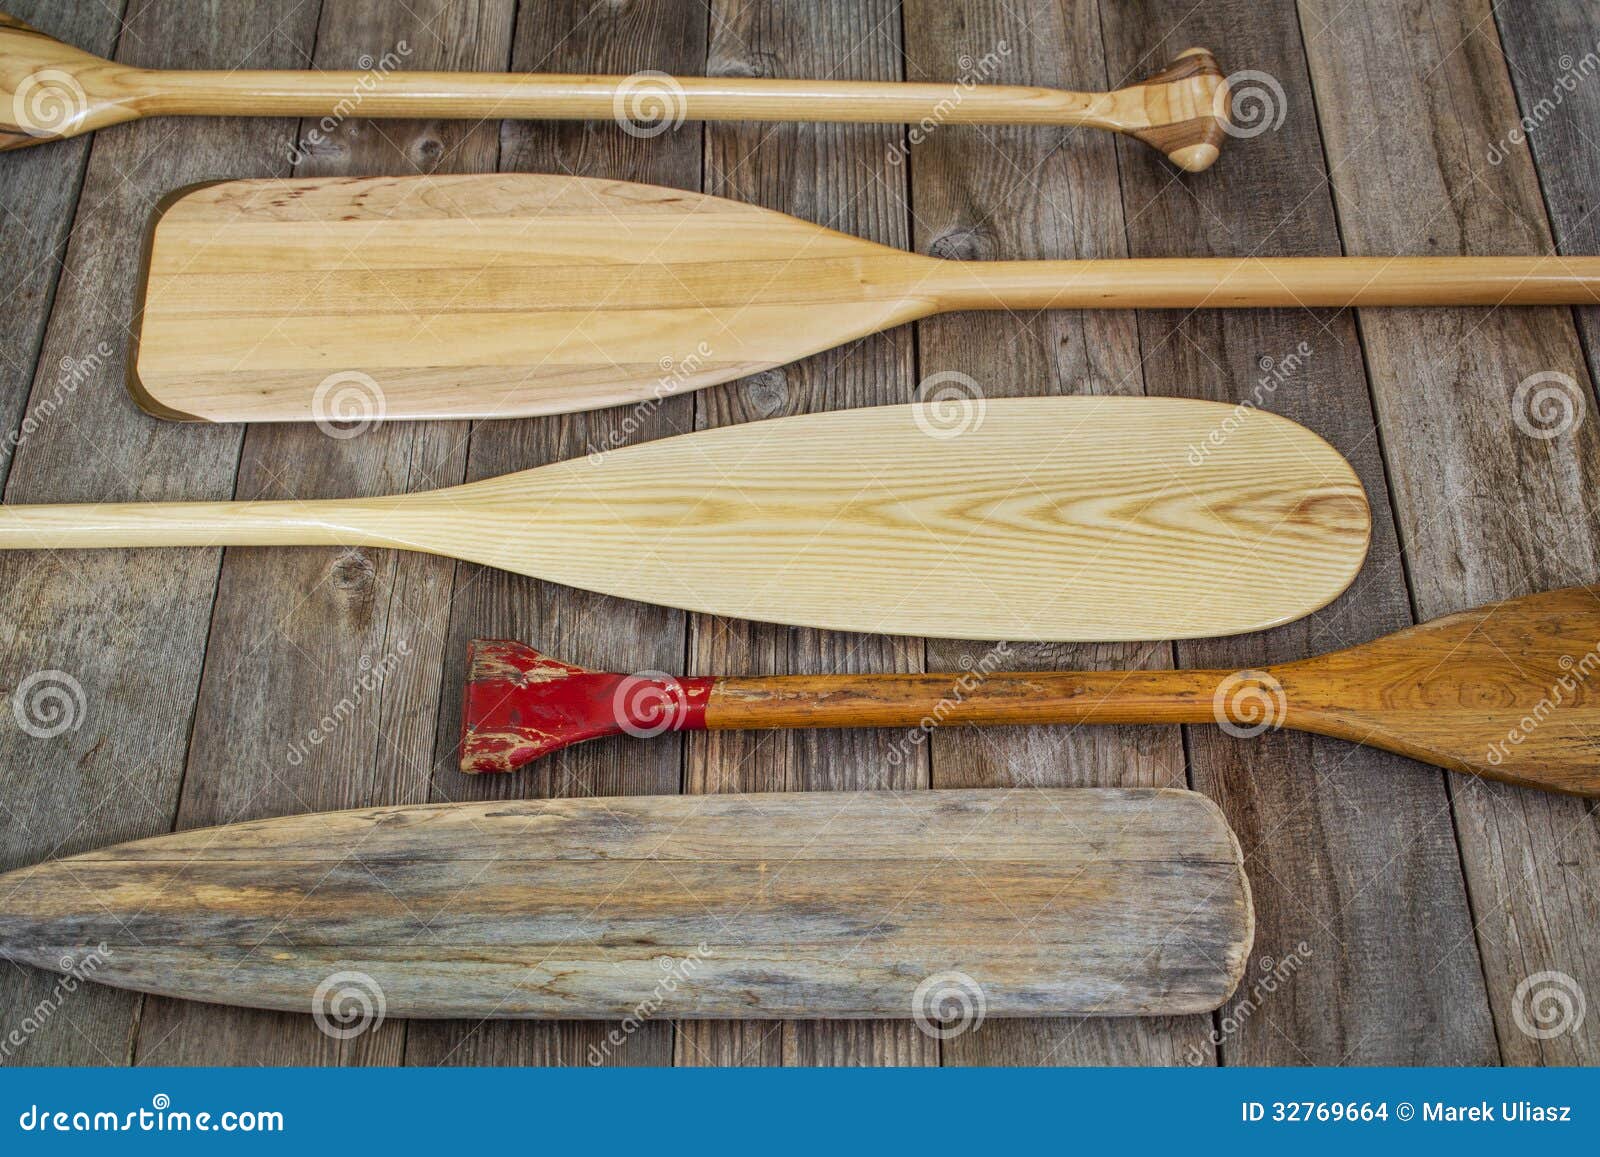 Wooden canoe paddles stock photo. Image of water, canoe ...